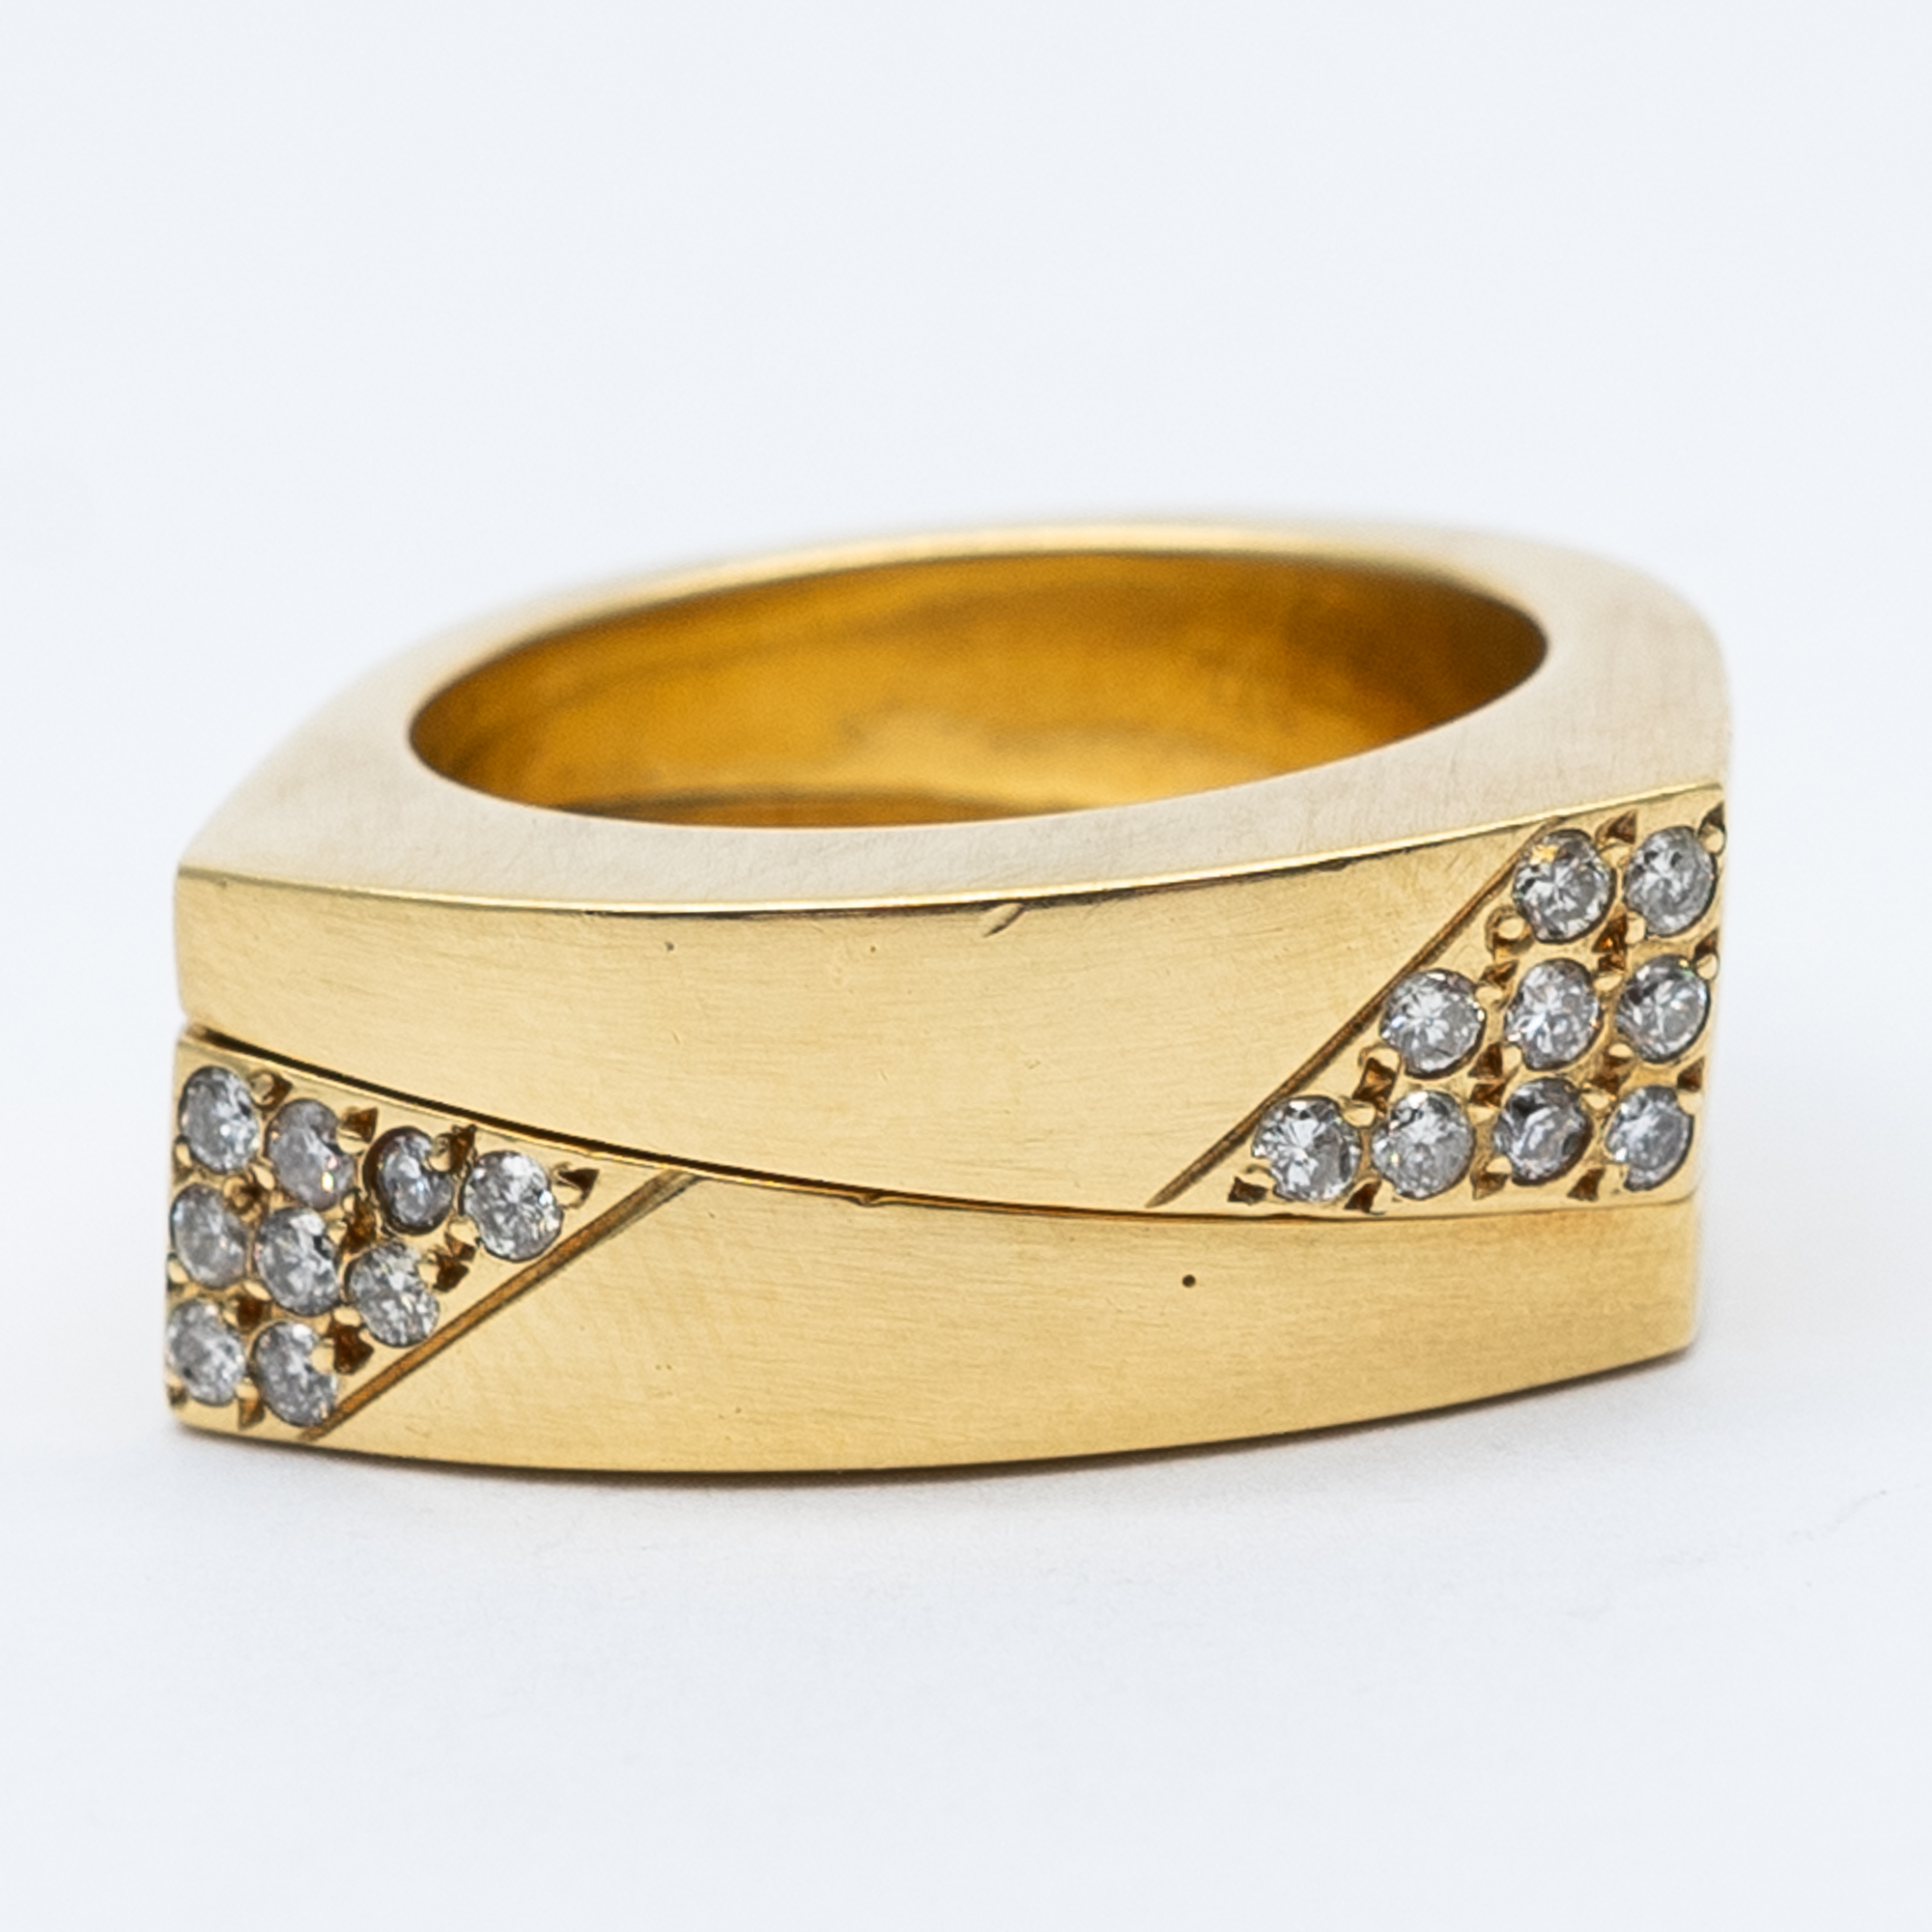 An 18ct yellow gold diamond ring